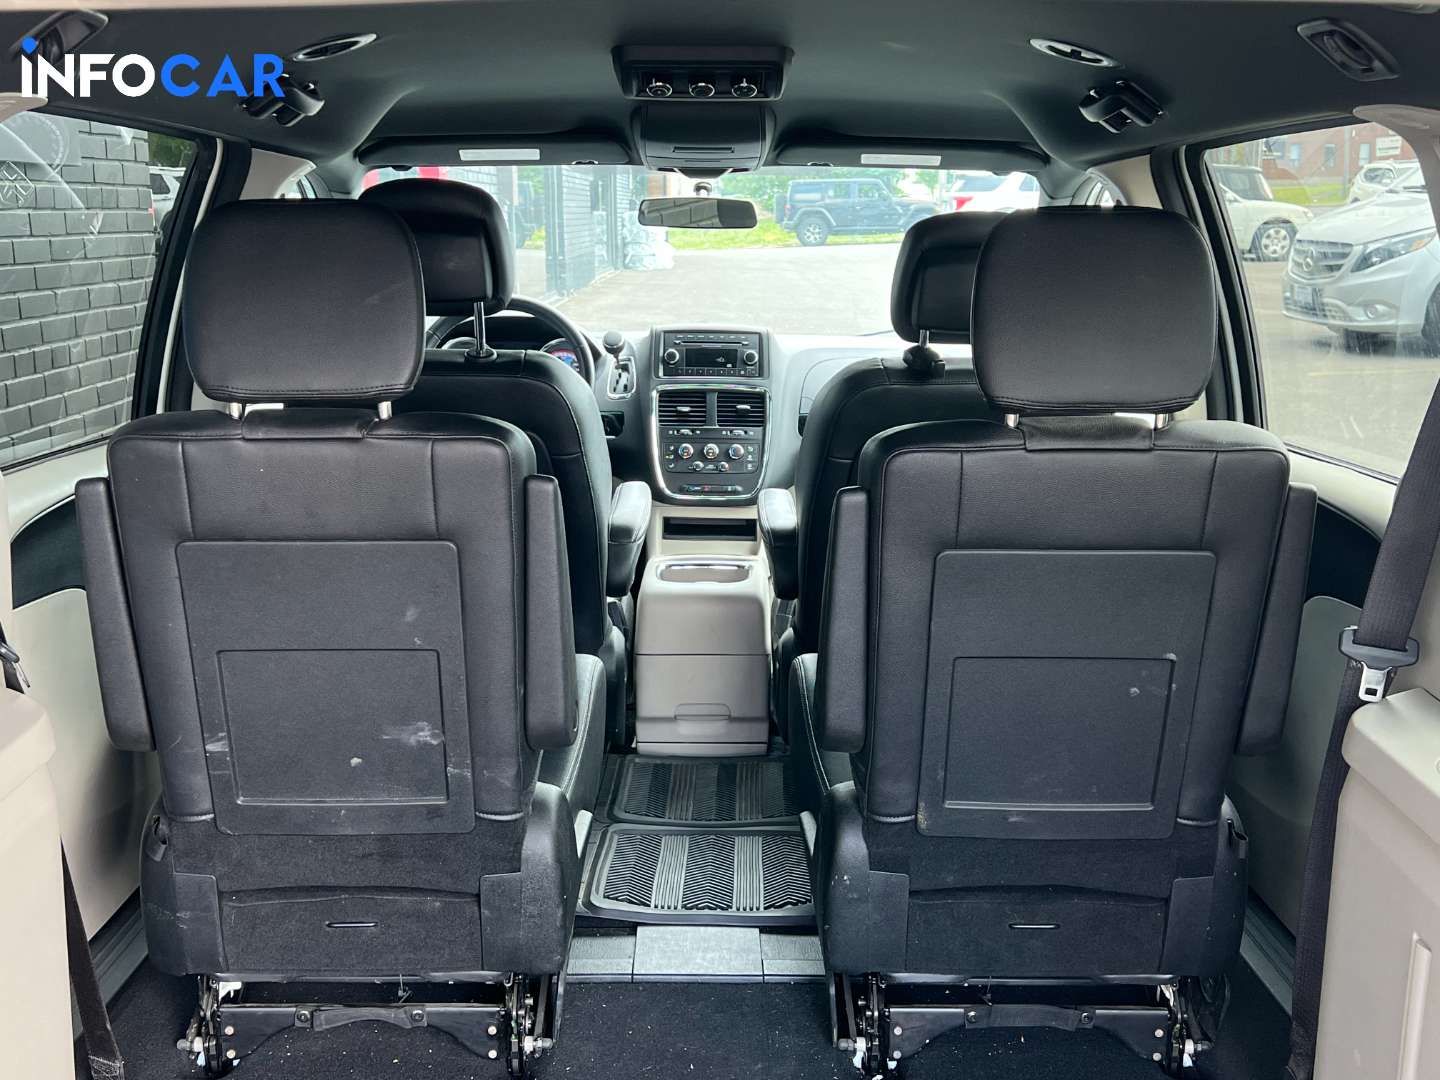 2017 Dodge Caravan se - INFOCAR - Toronto Auto Trading Platform